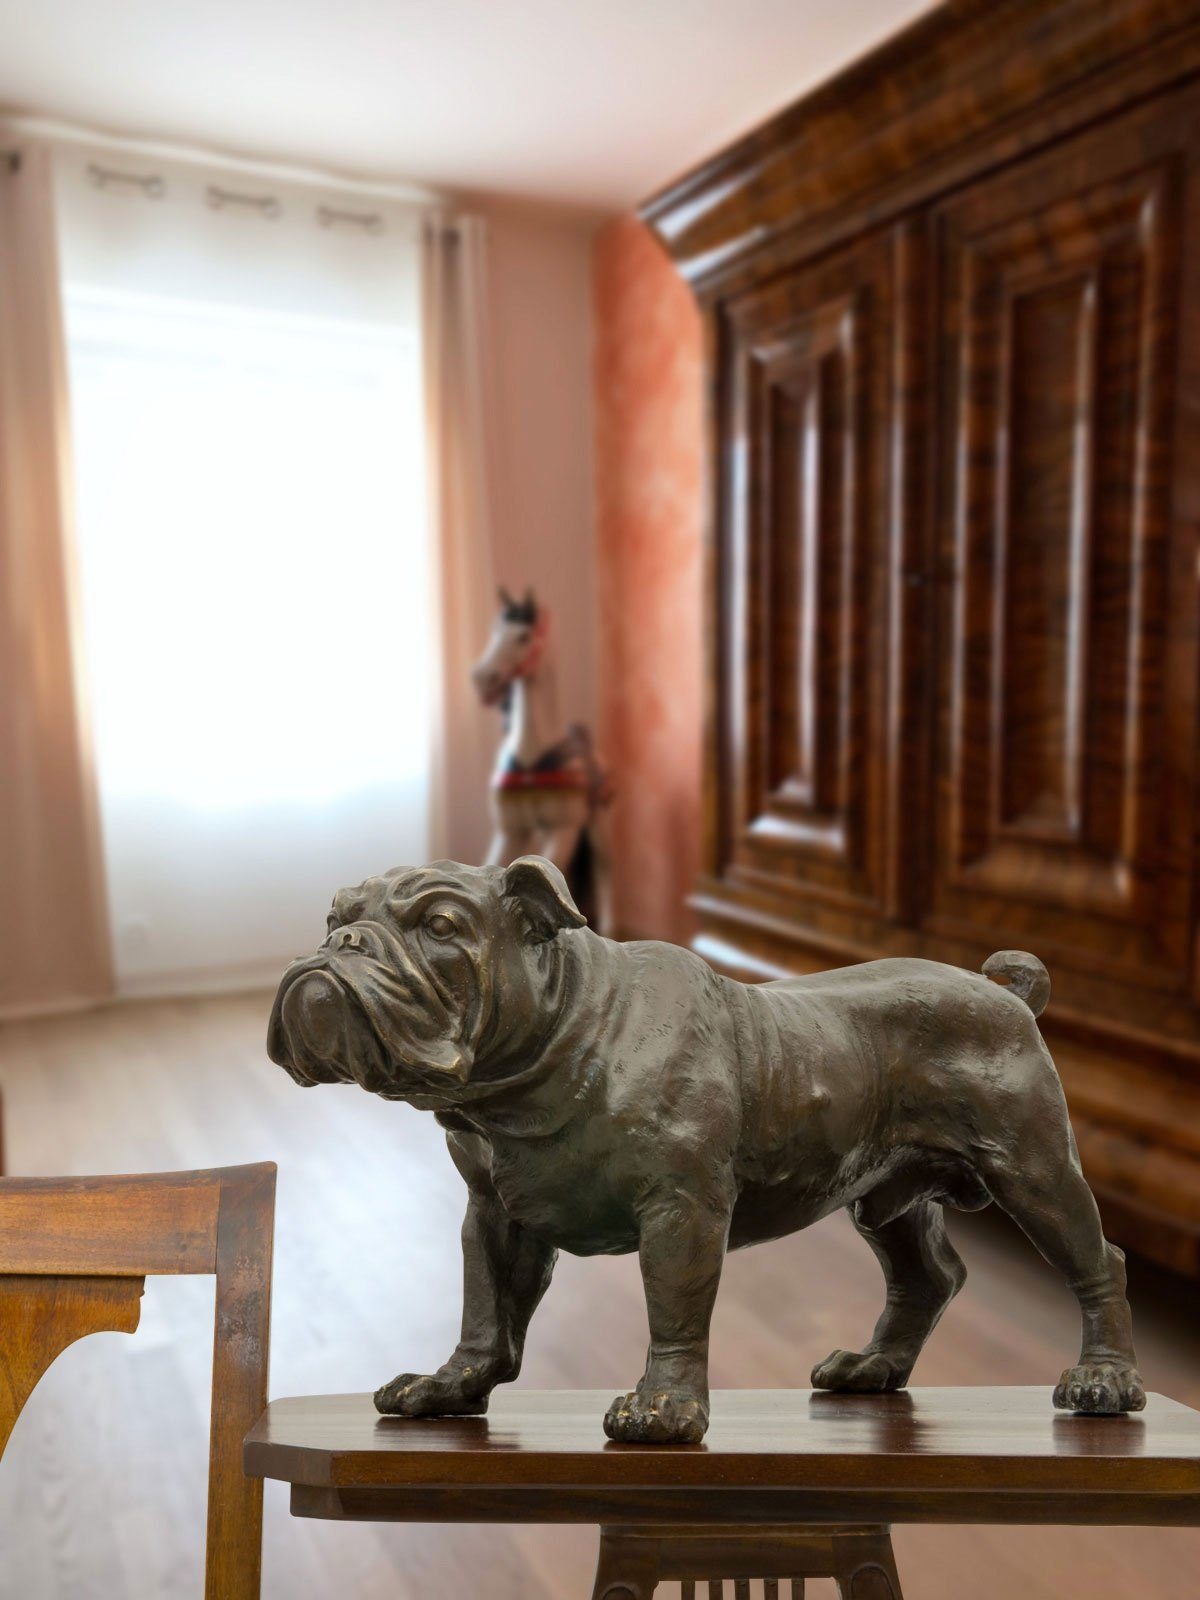 Aubaho Skulptur Bronzeskulptur Hund Antik-Stil 55cm im Bronze Bulldogge Statue Figur